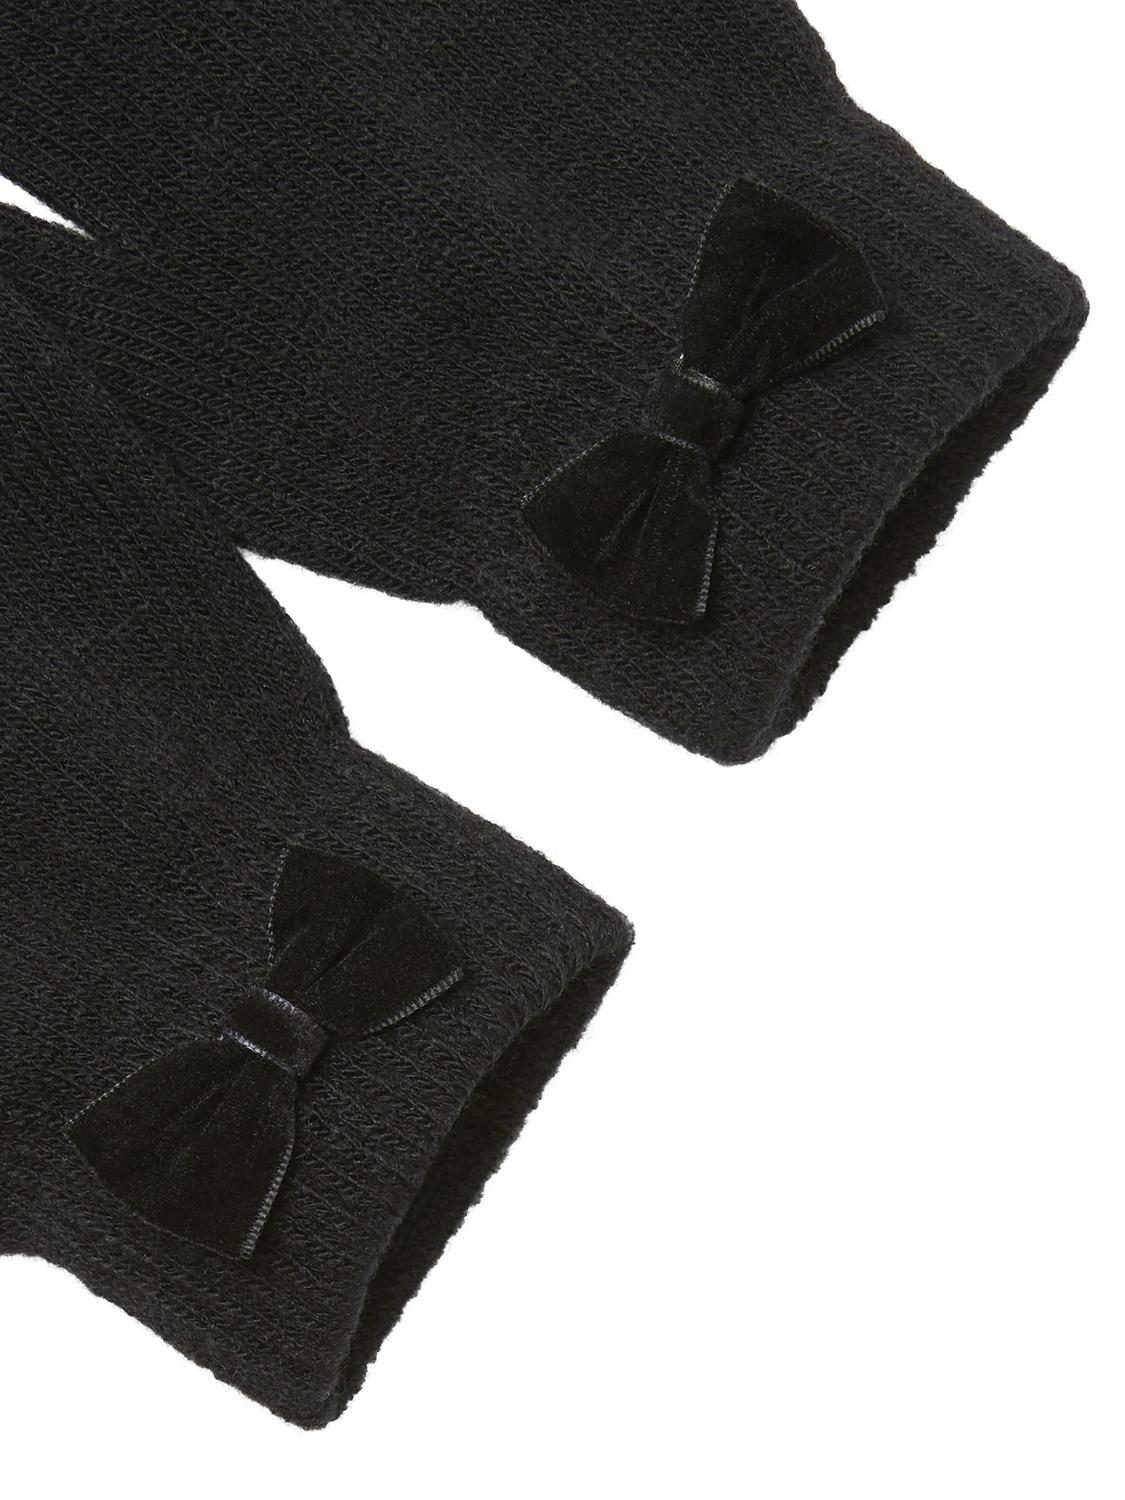 Buddy Bow Smart Gloves – Black